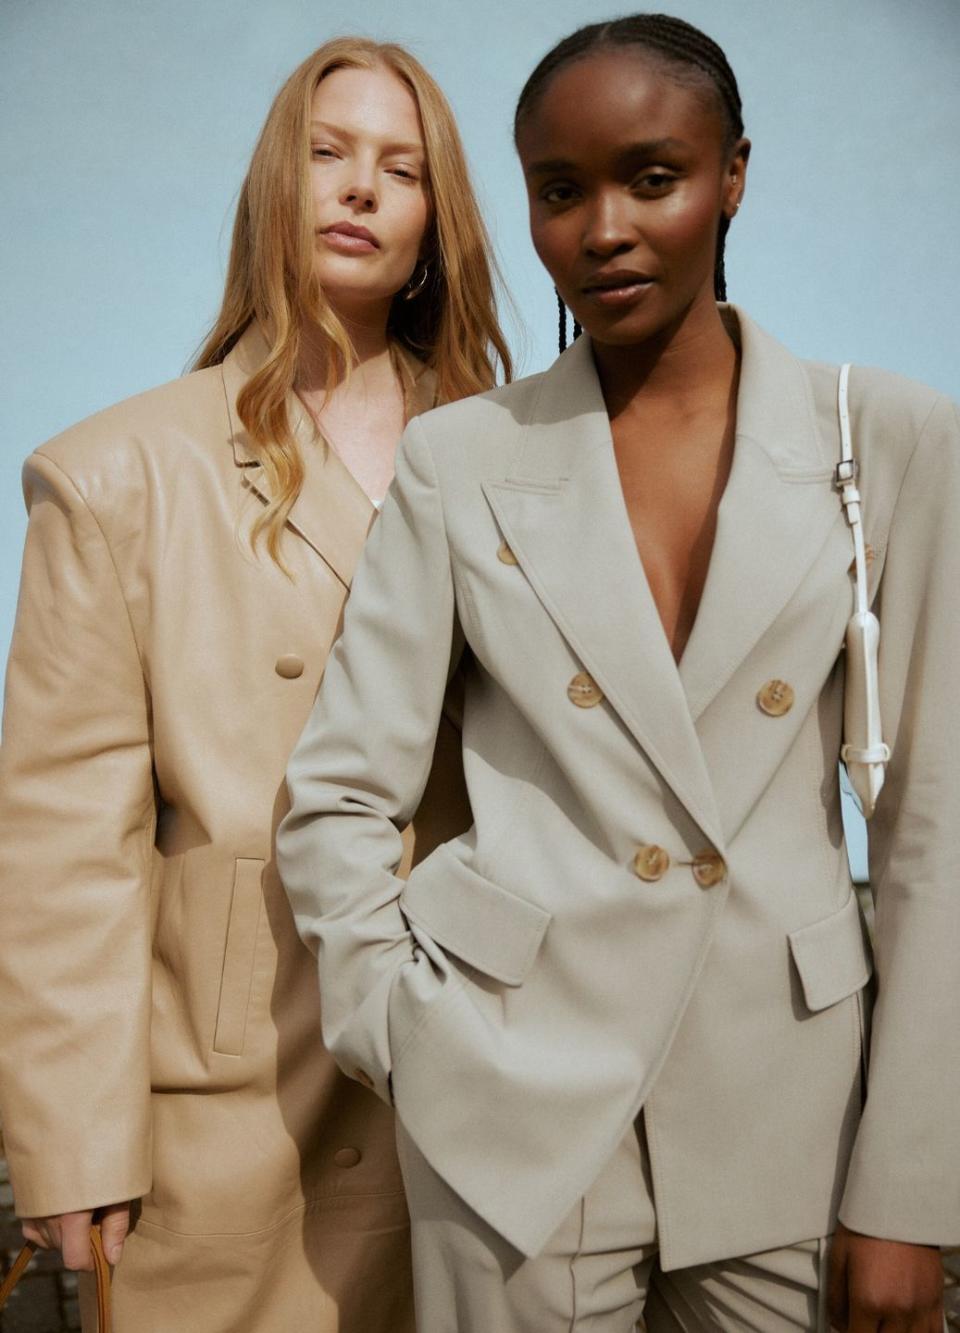 hurr rental flex featuring two models wearing beige suits